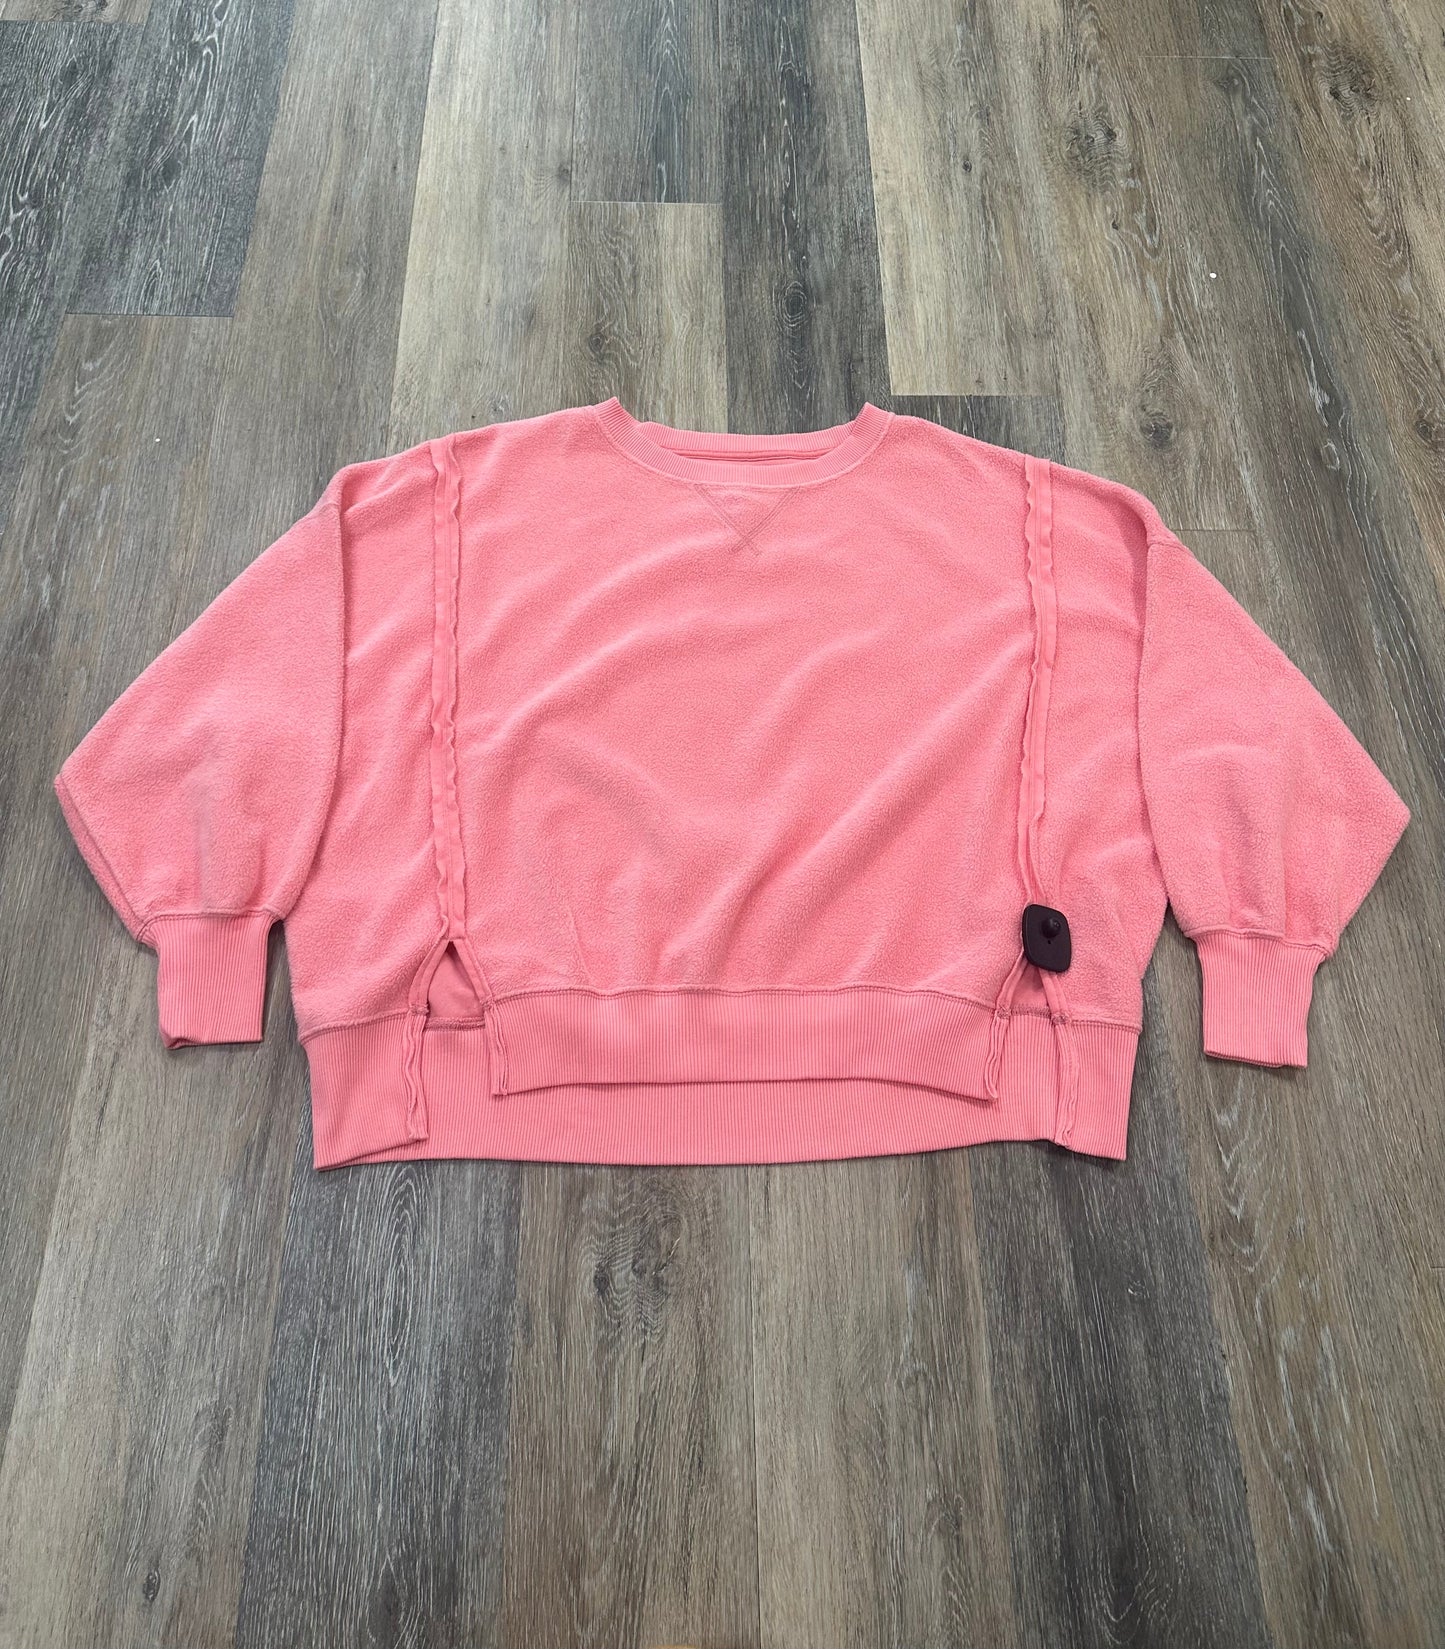 Pink Athletic Sweatshirt Crewneck American Eagle, Size Xs